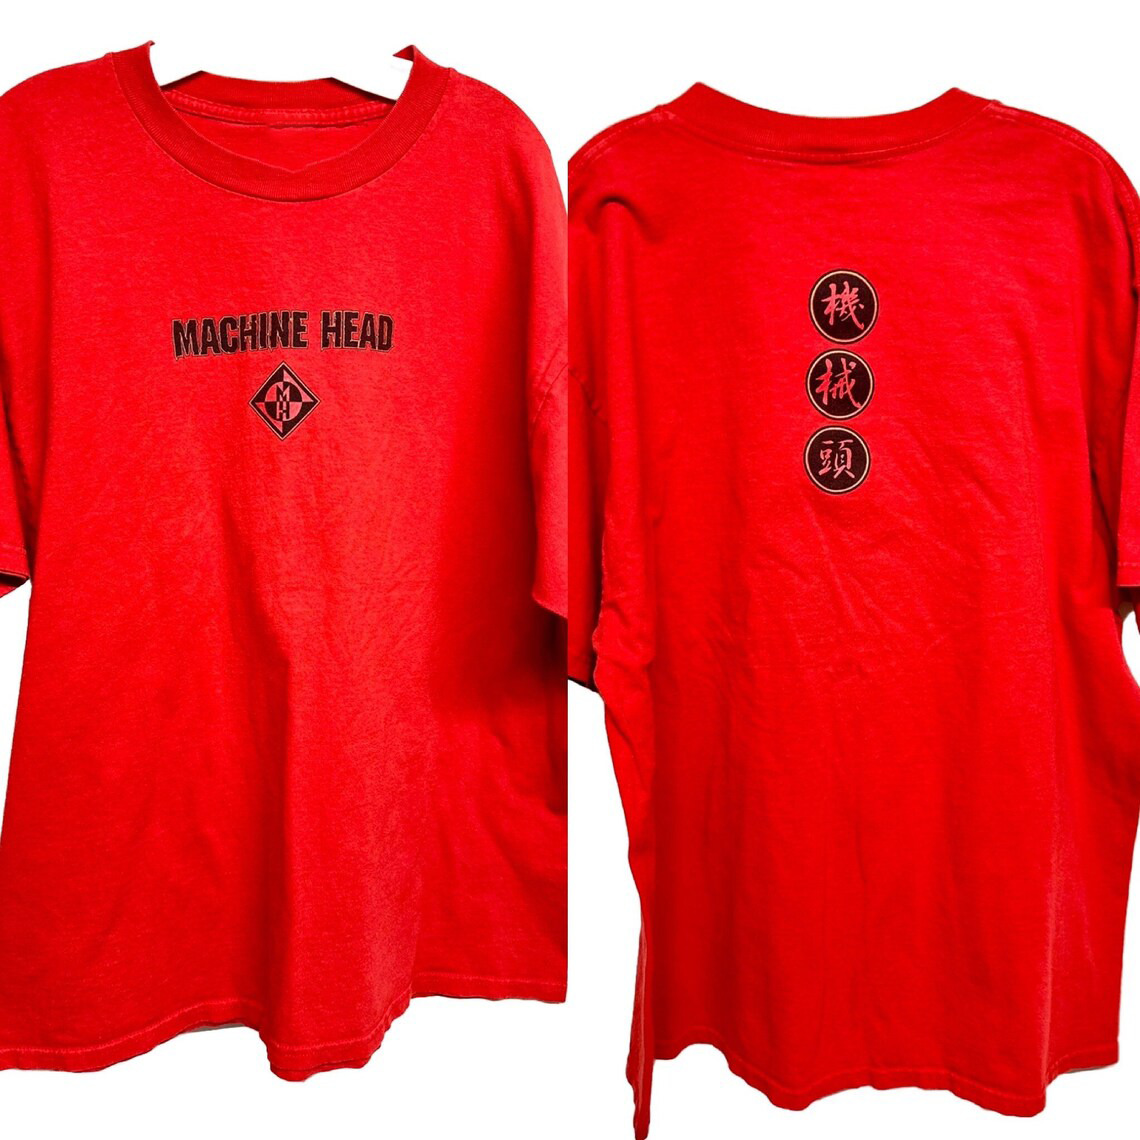 Machine Head Band Concert Music Tour Cotton T-Shirt For Men Women CS597